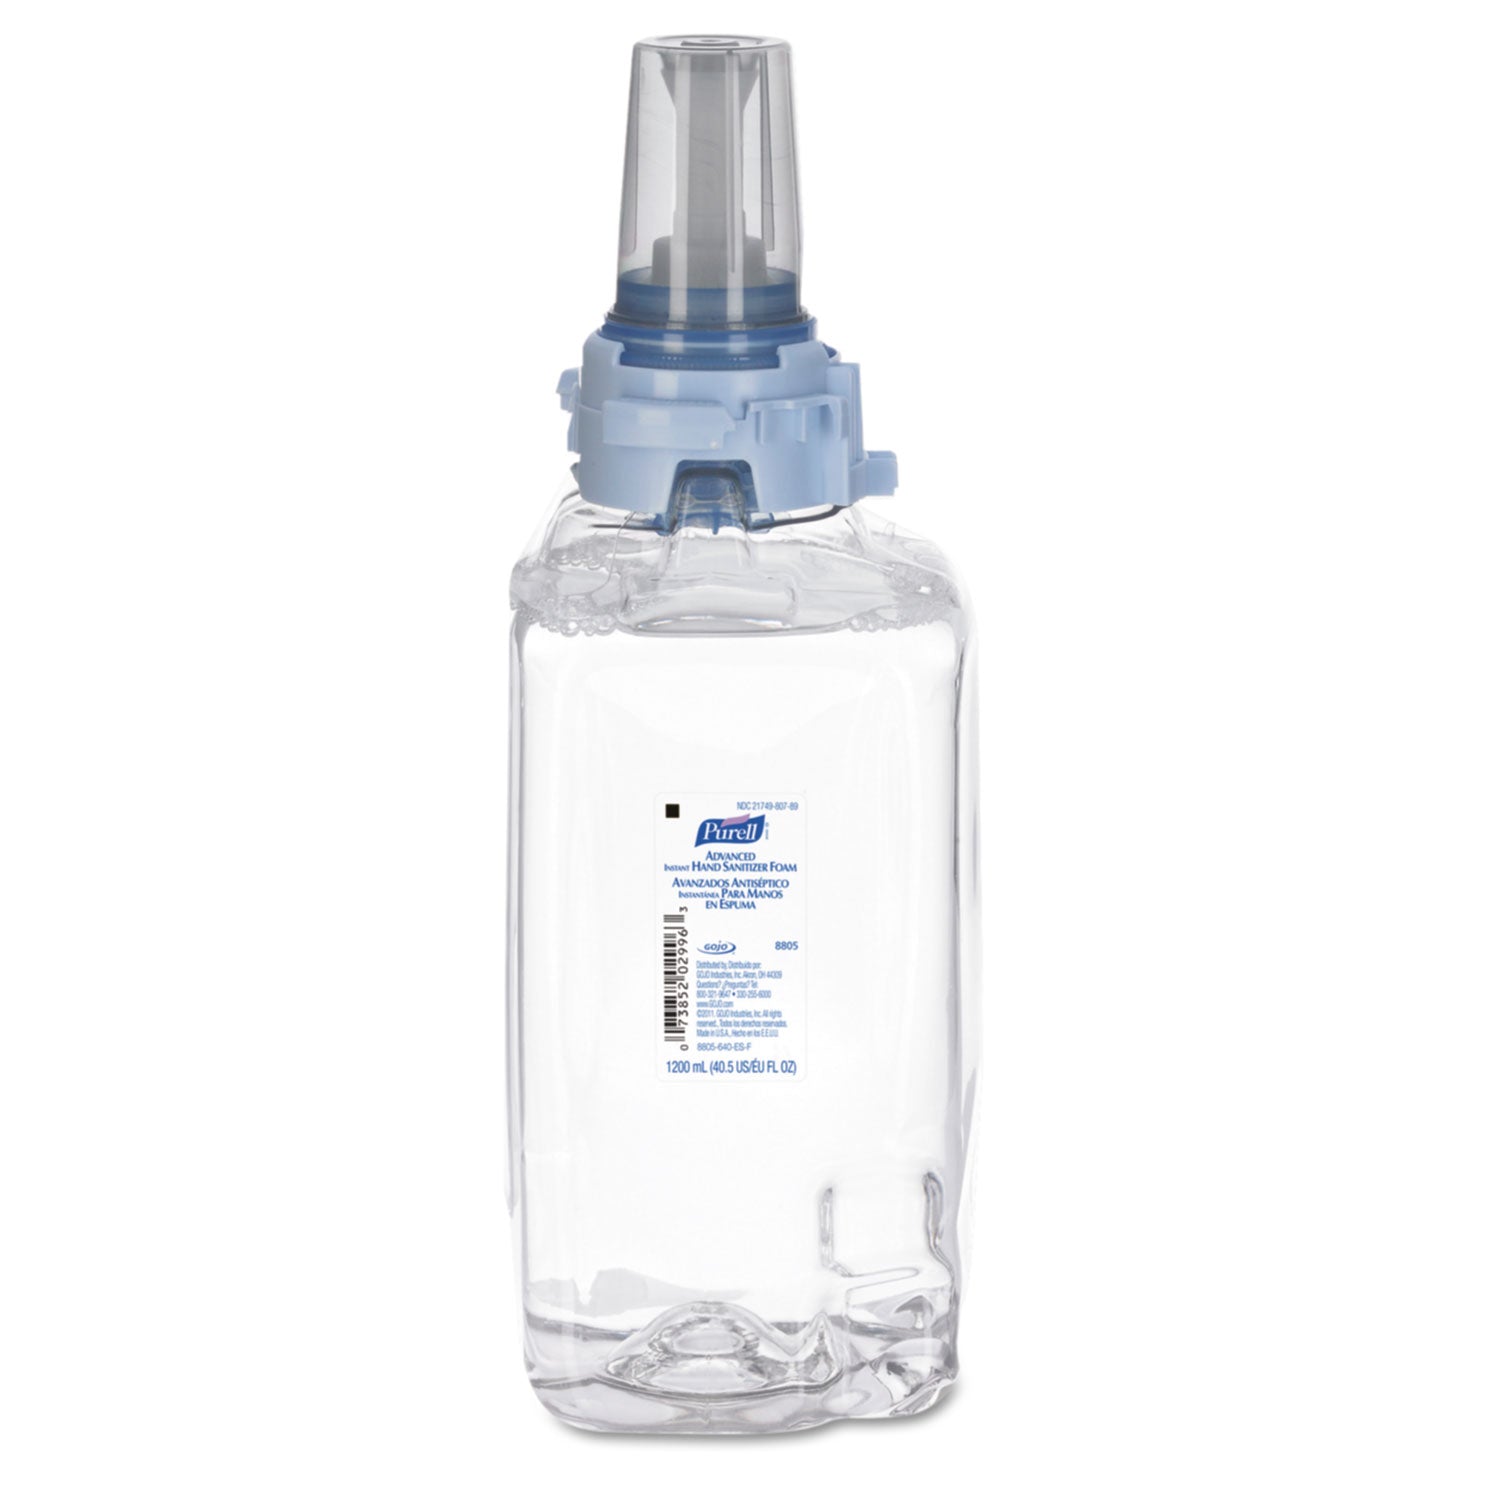 Advanced Hand Sanitizer Foam, For ADX-12, Dispensers, 1,200 mL Fragrance-Free - 